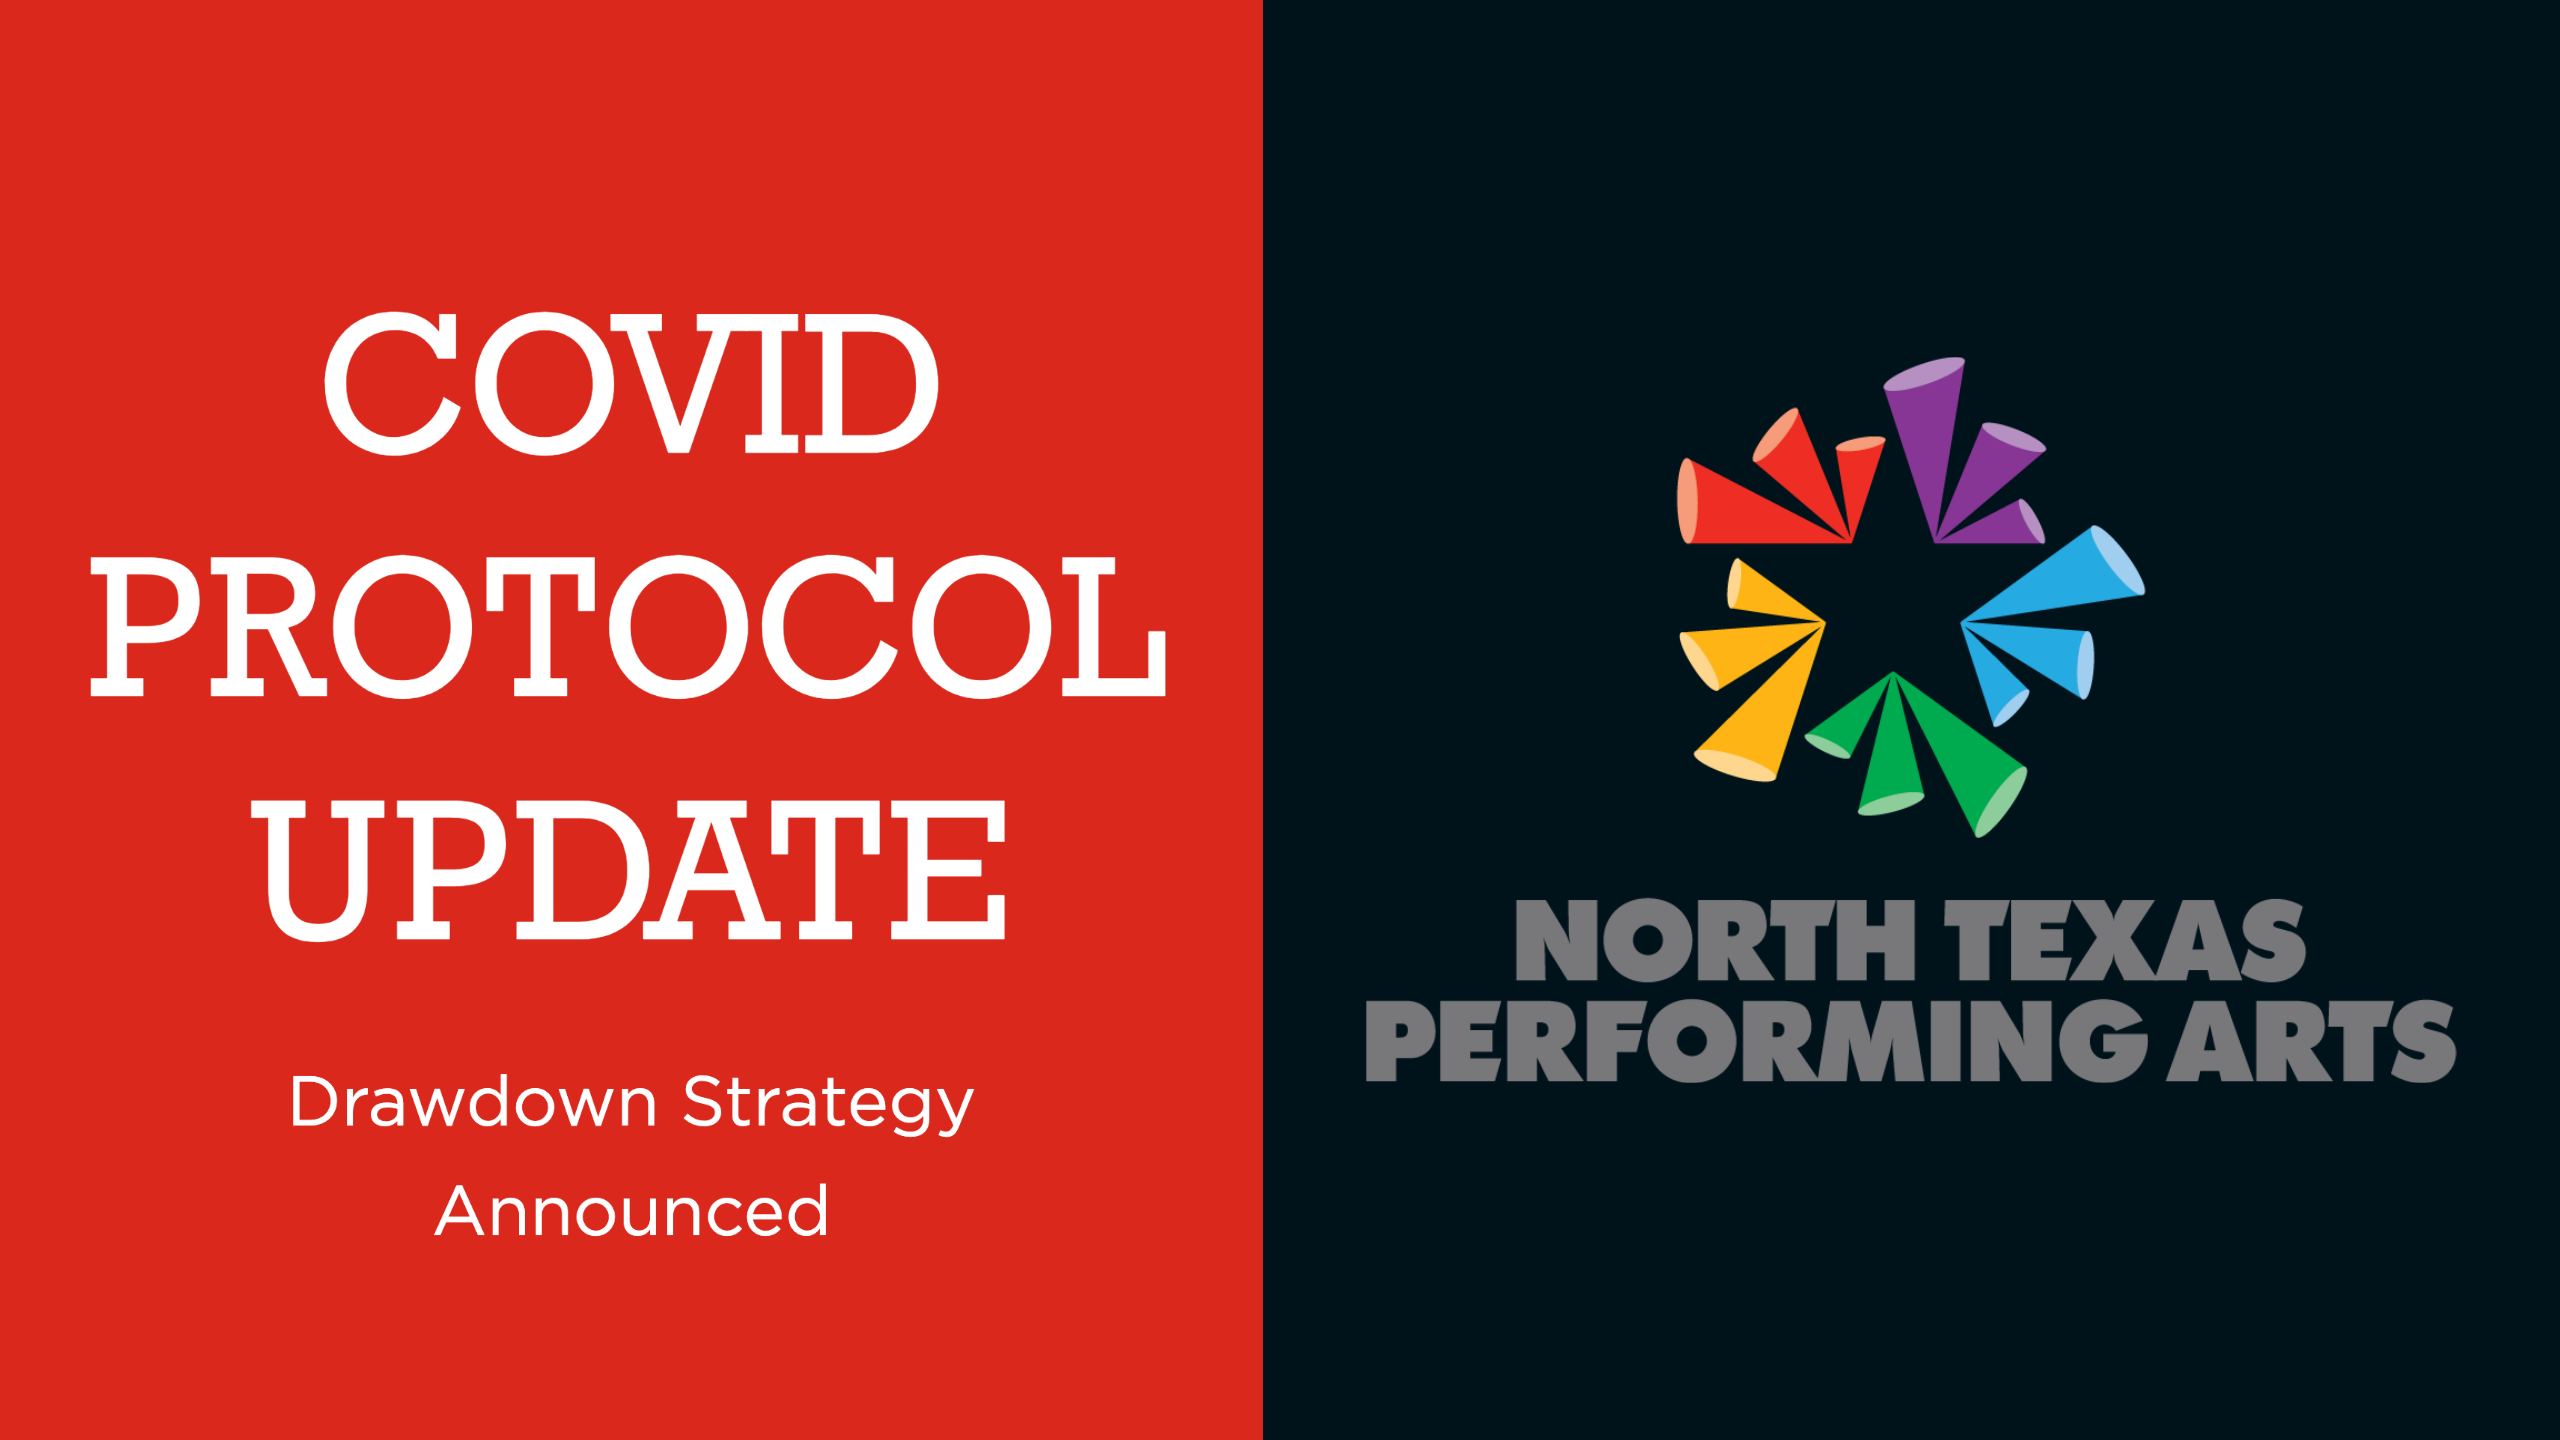 Covid Protocol Update - Drawdown Strategy Announced